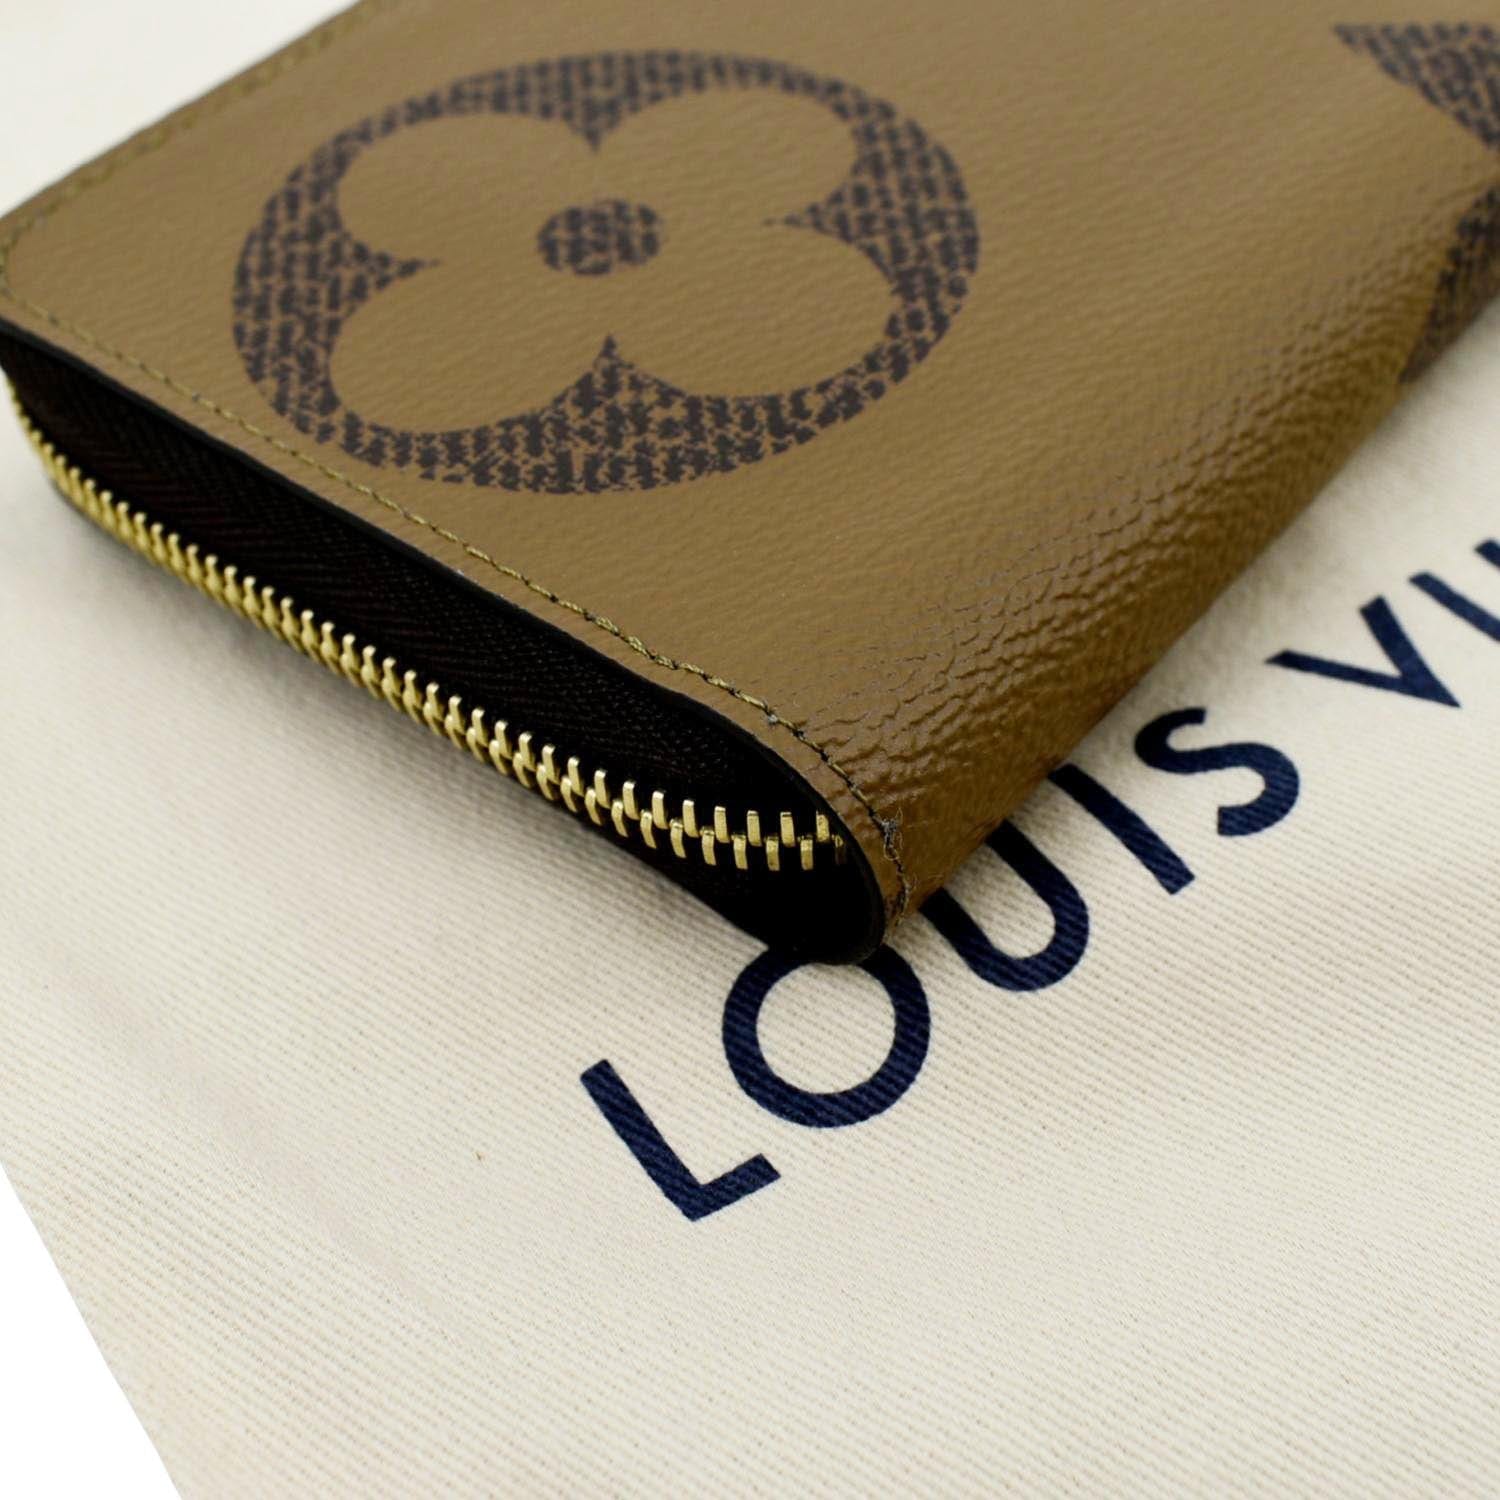 Louis Vuitton Coated Canvas Passport Travel Wallet on SALE